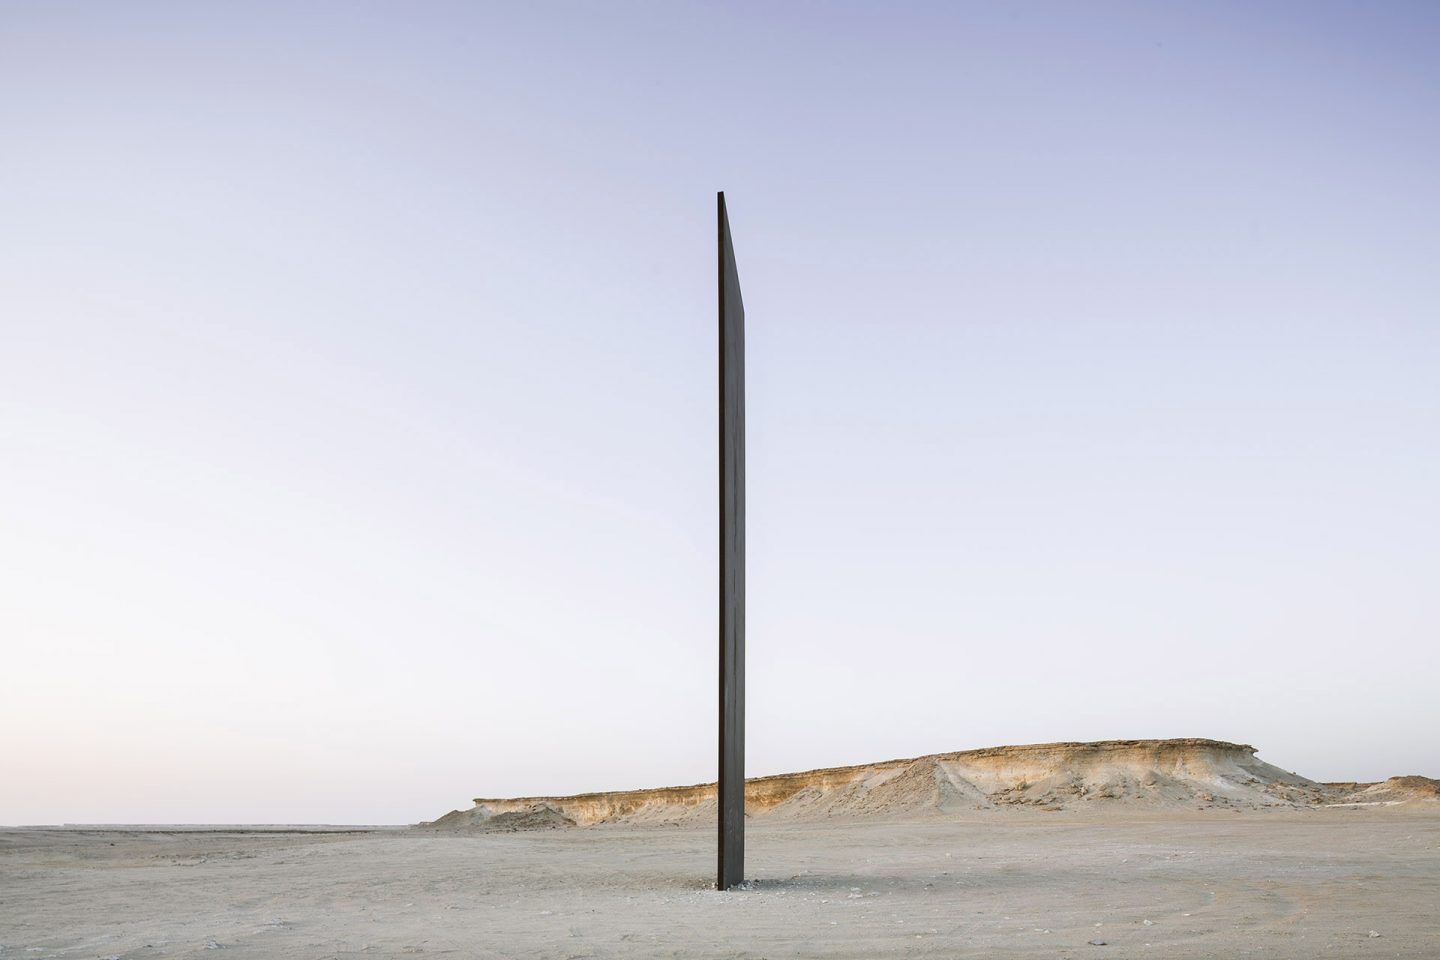 Richard Serras Monumental Public Art Work In The Qatari Desert East